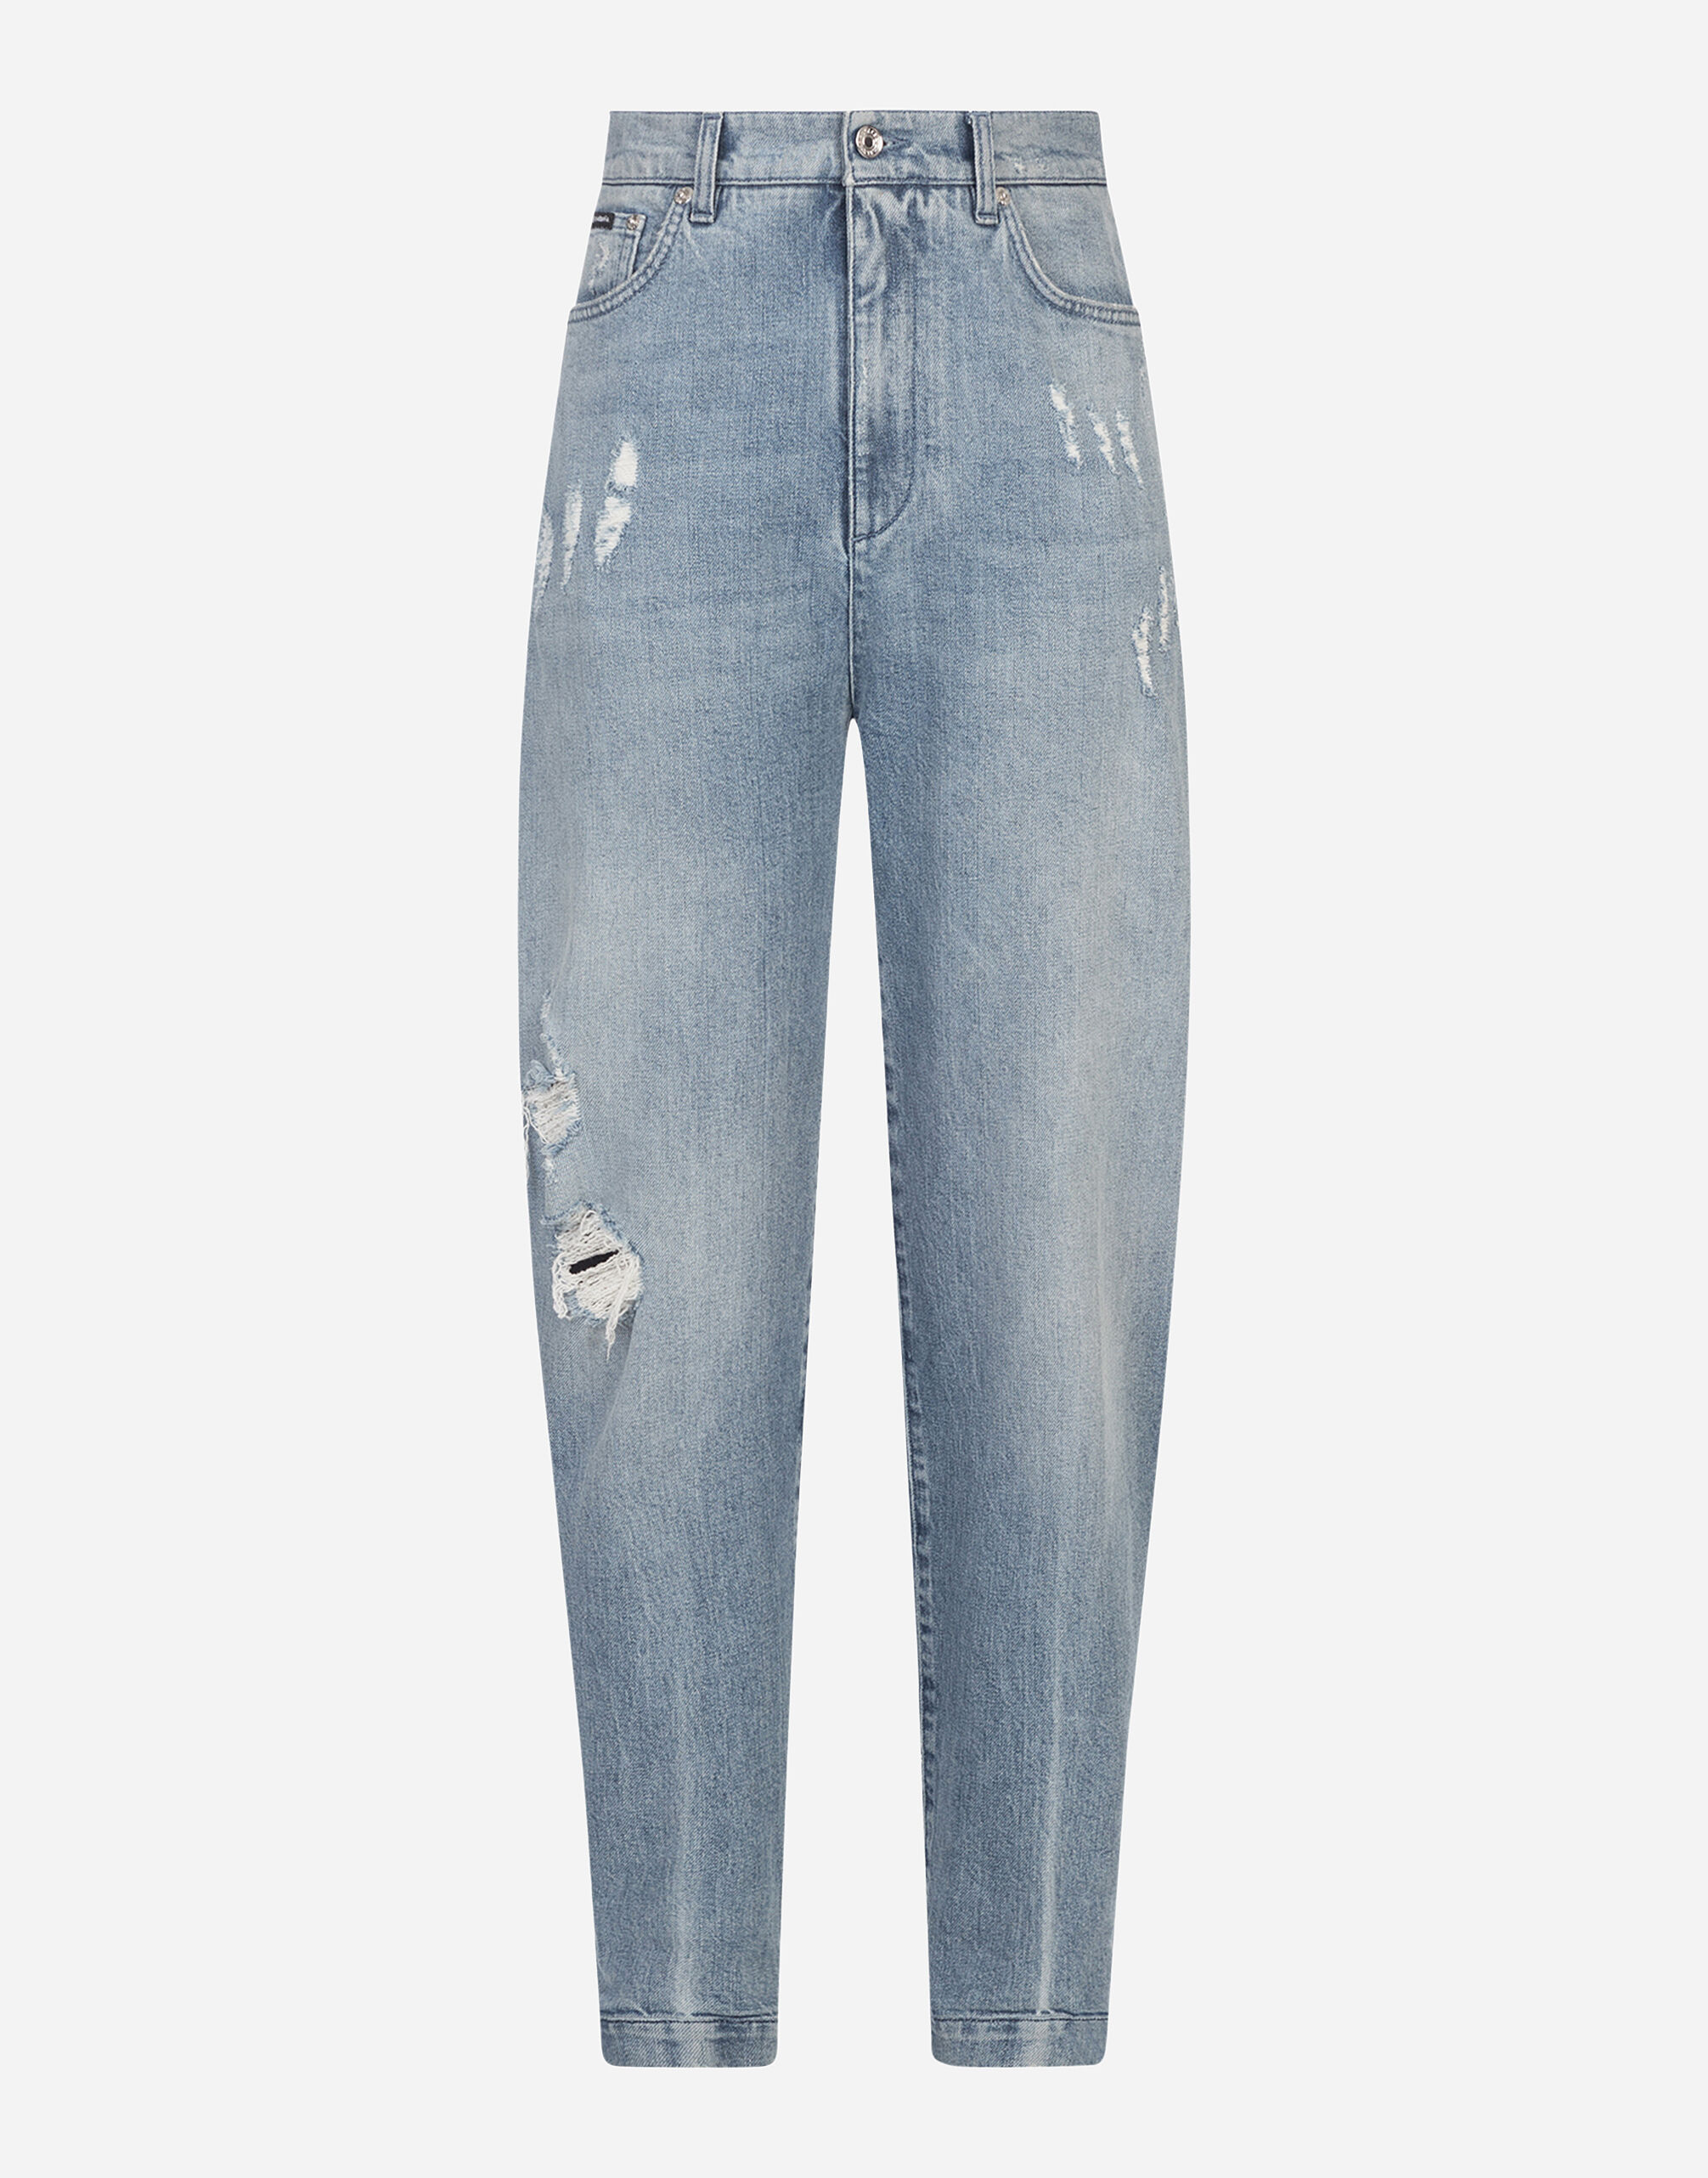 Dolce & Gabbana Boyfriend jeans in light blue denim with rips Black F6J4UTFUBD2